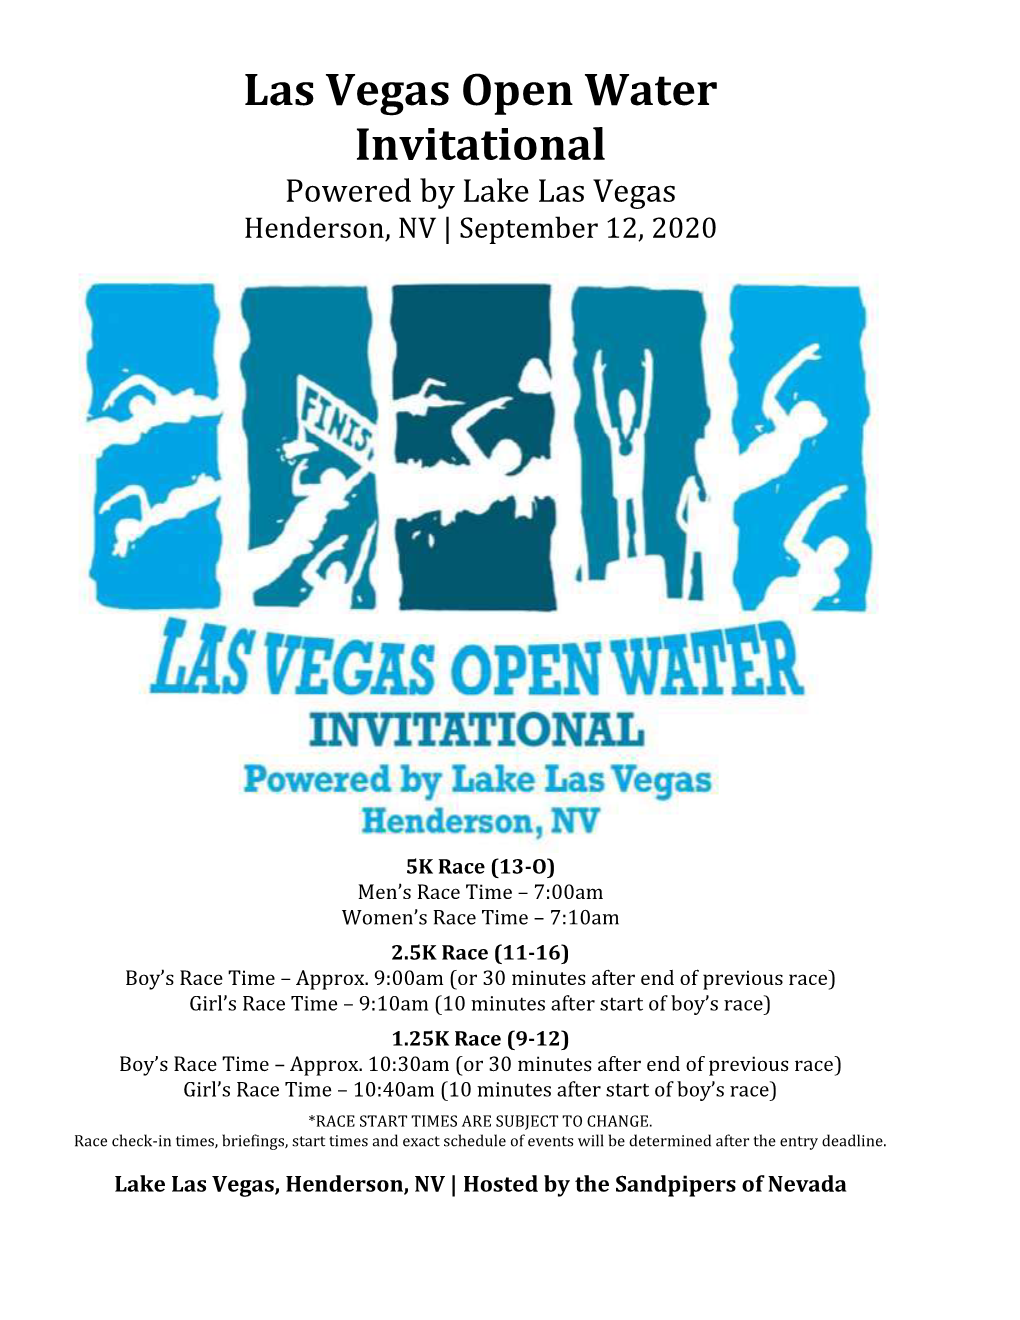 Las Vegas Open Water Invitational Powered by Lake Las Vegas Henderson, NV | September 12, 2020